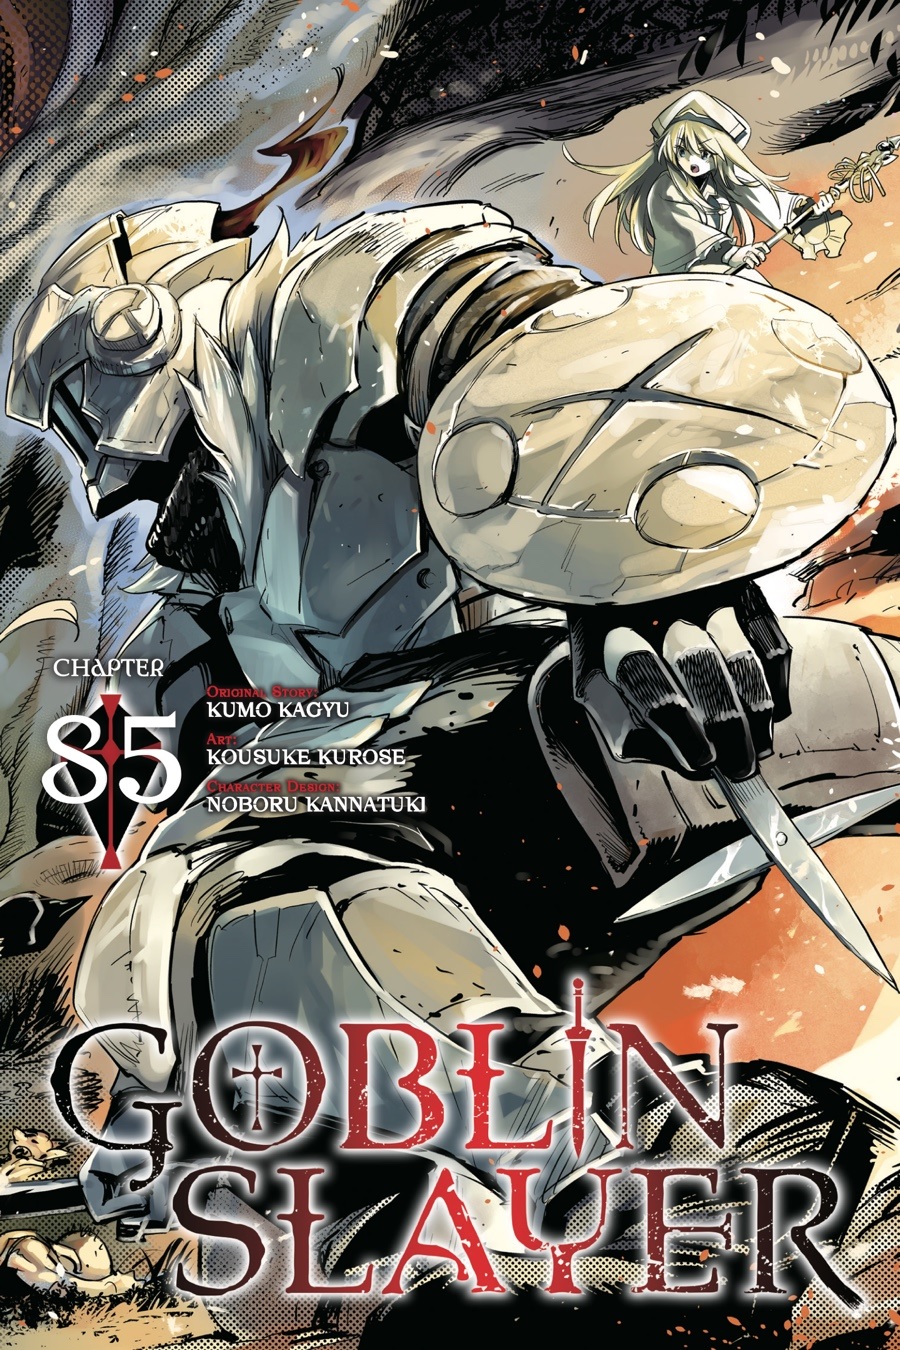 Manga Volume 3, Goblin Slayer Wiki